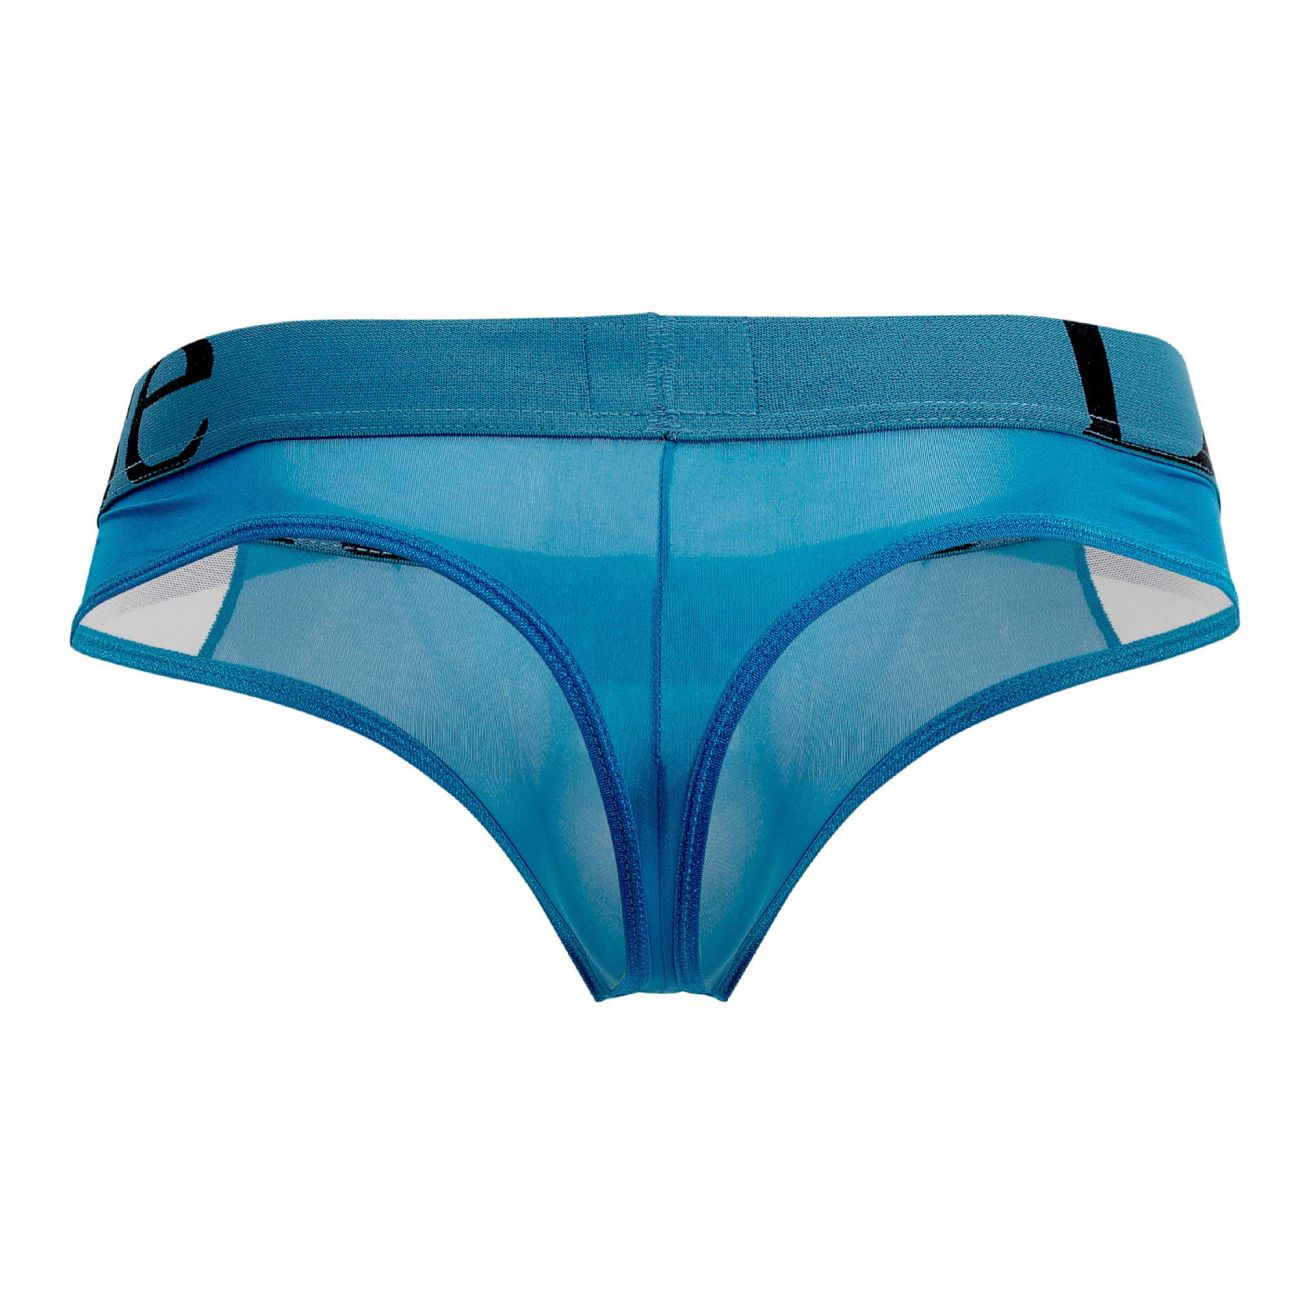 Underwear: Doreanse 1224-EMR Window Thongs | eBay